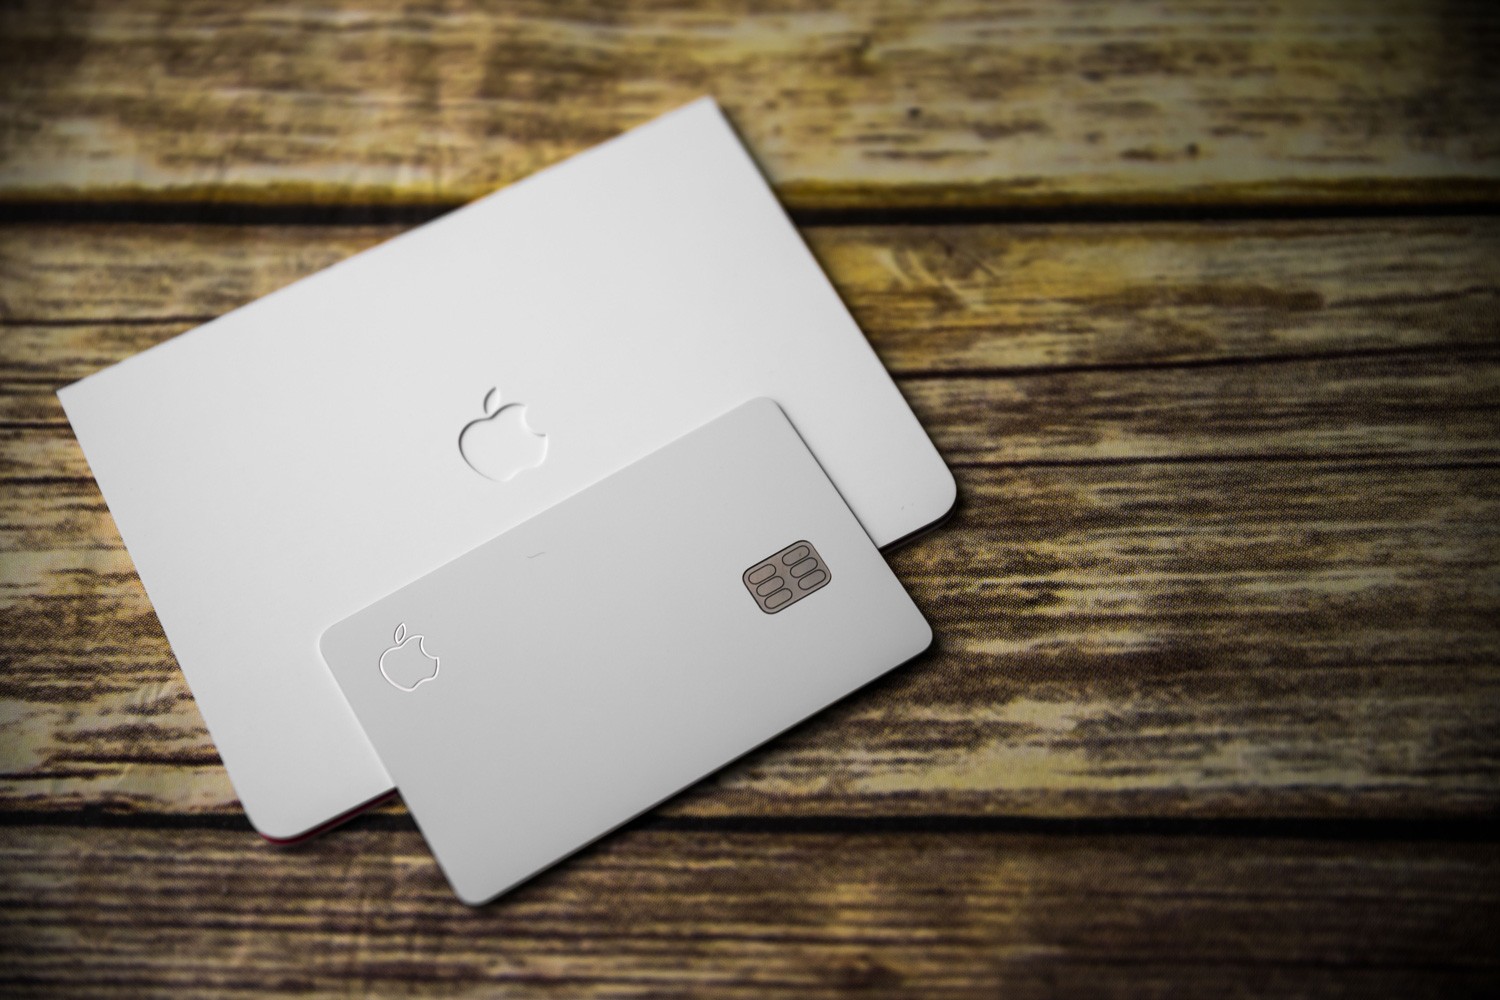 Physical Apple Card Titanium. Apple is a multinational technology company.